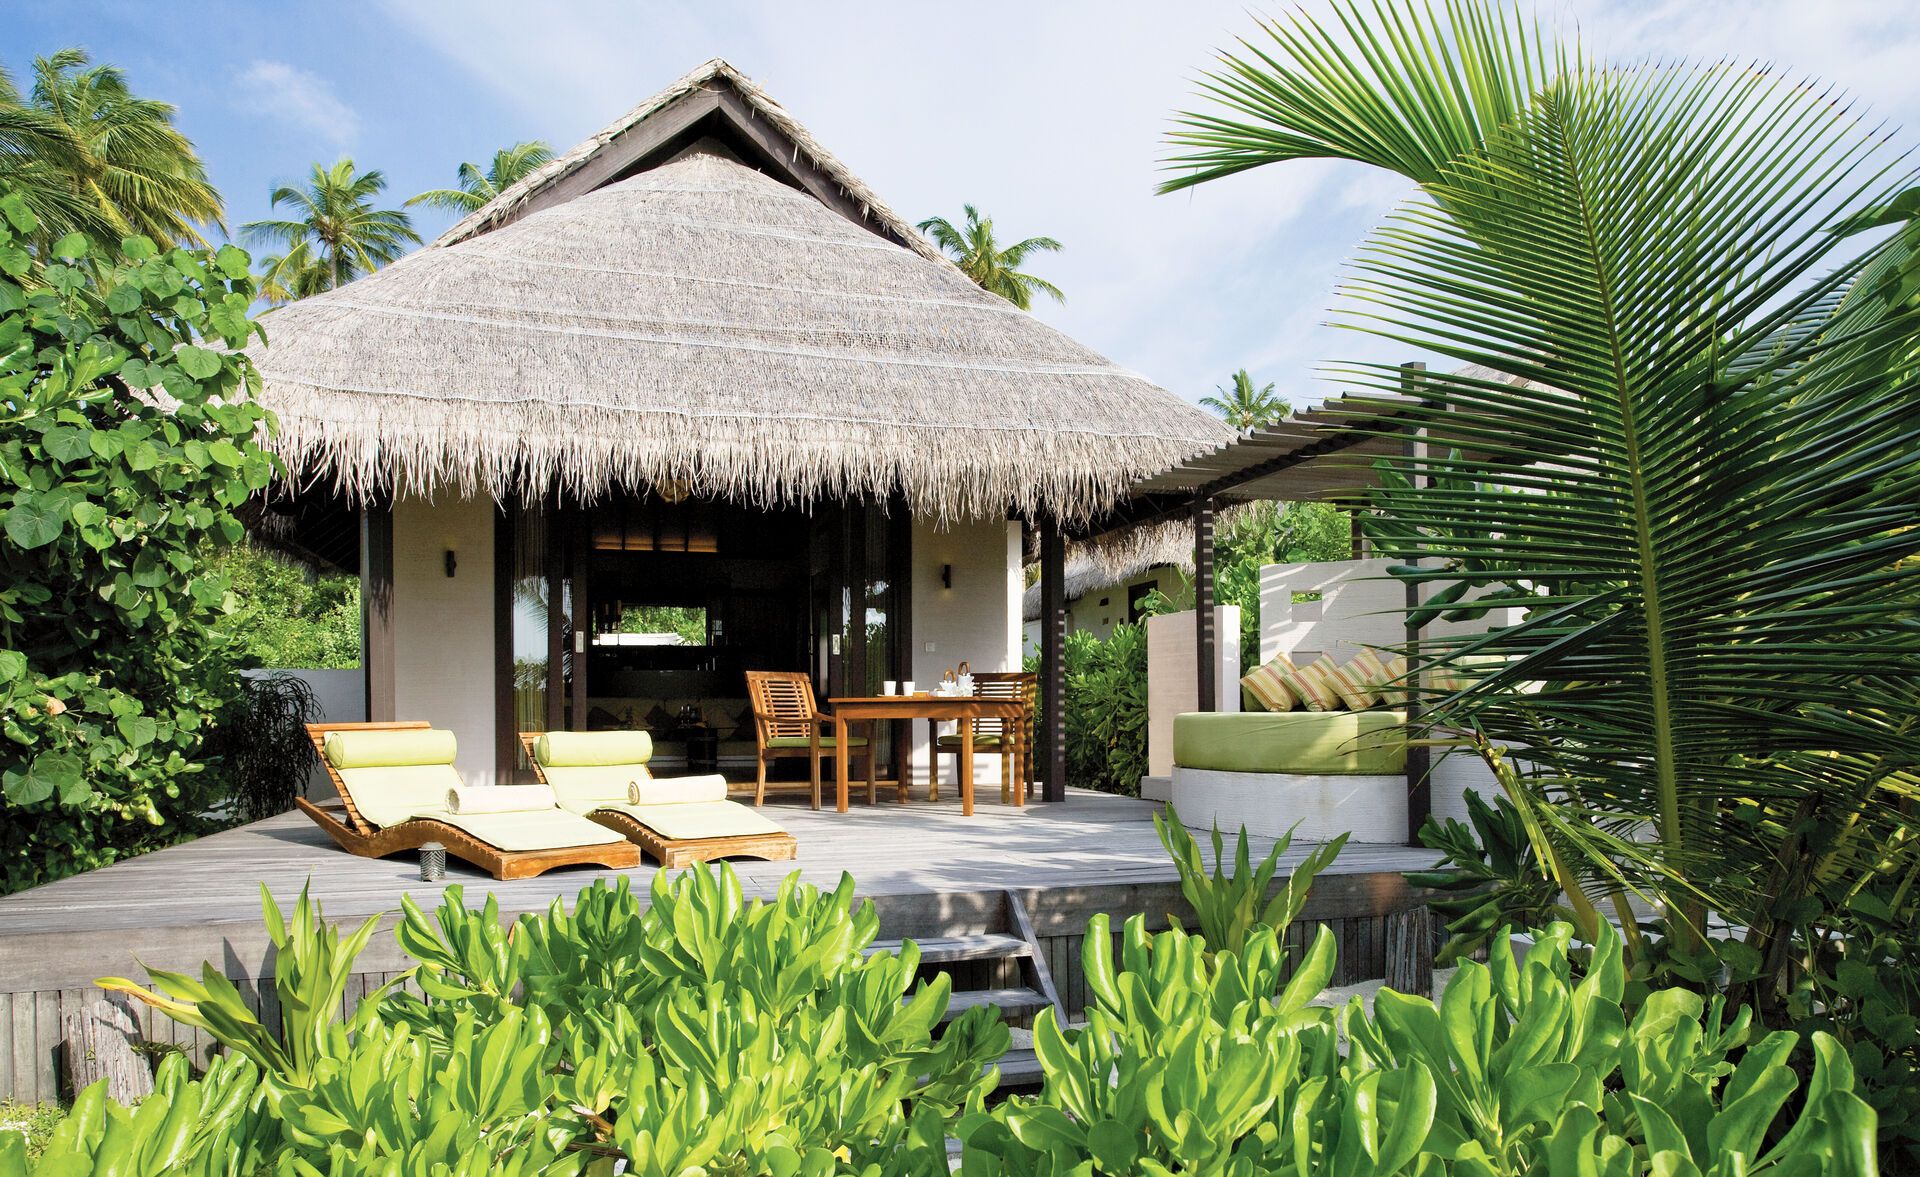 Maldives - Hotel Coco Bodu Hithi Resort 5*